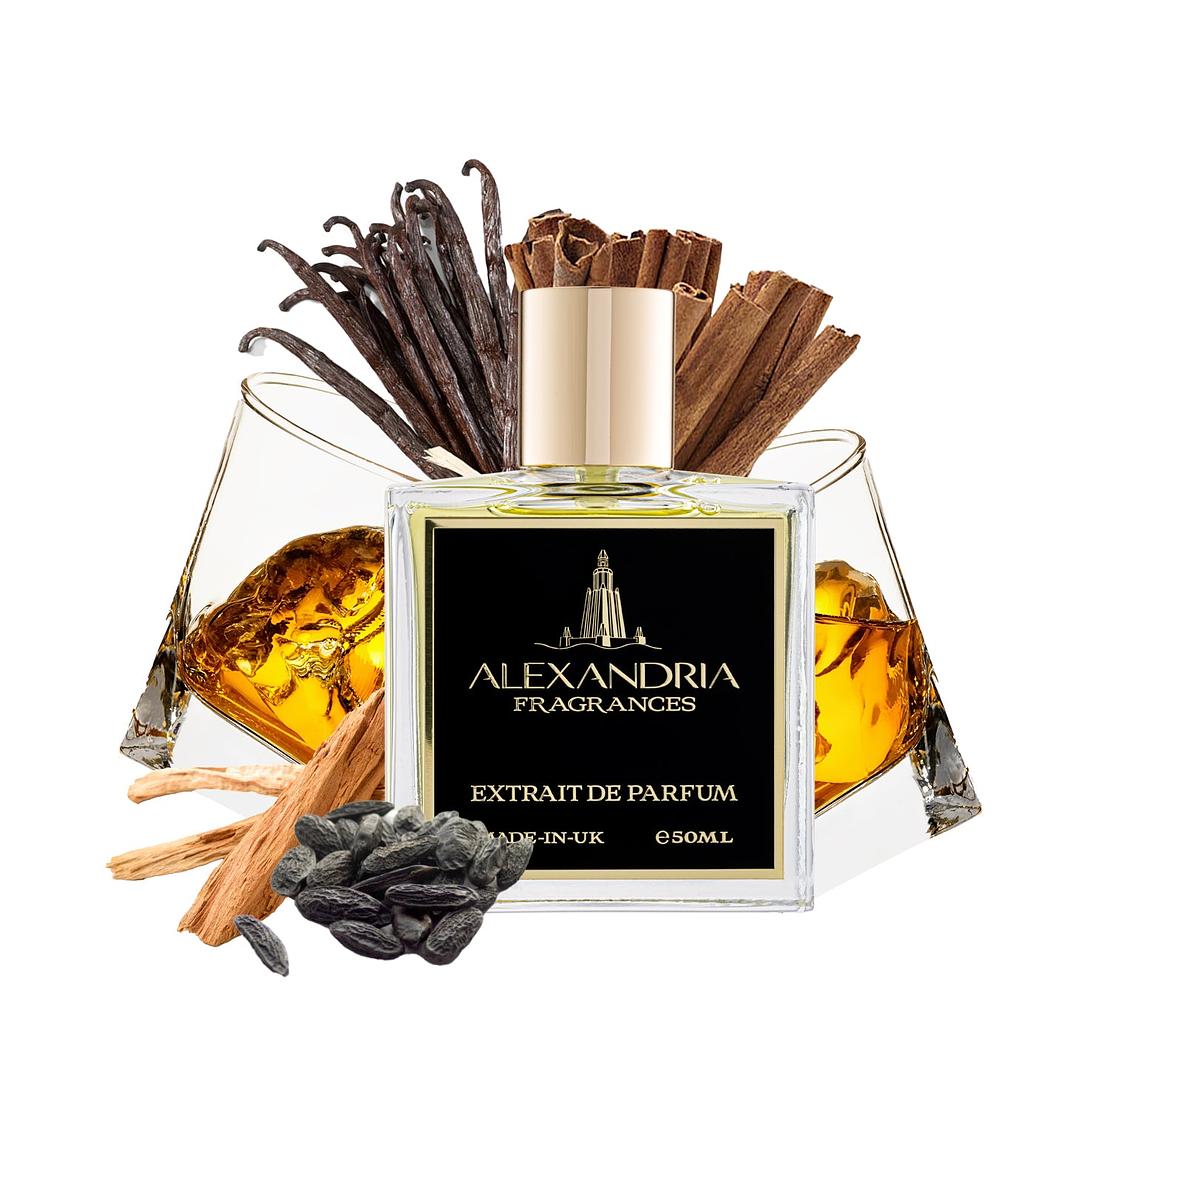 Afternoon Splash Alexandria Fragrances perfume - a fragrance for